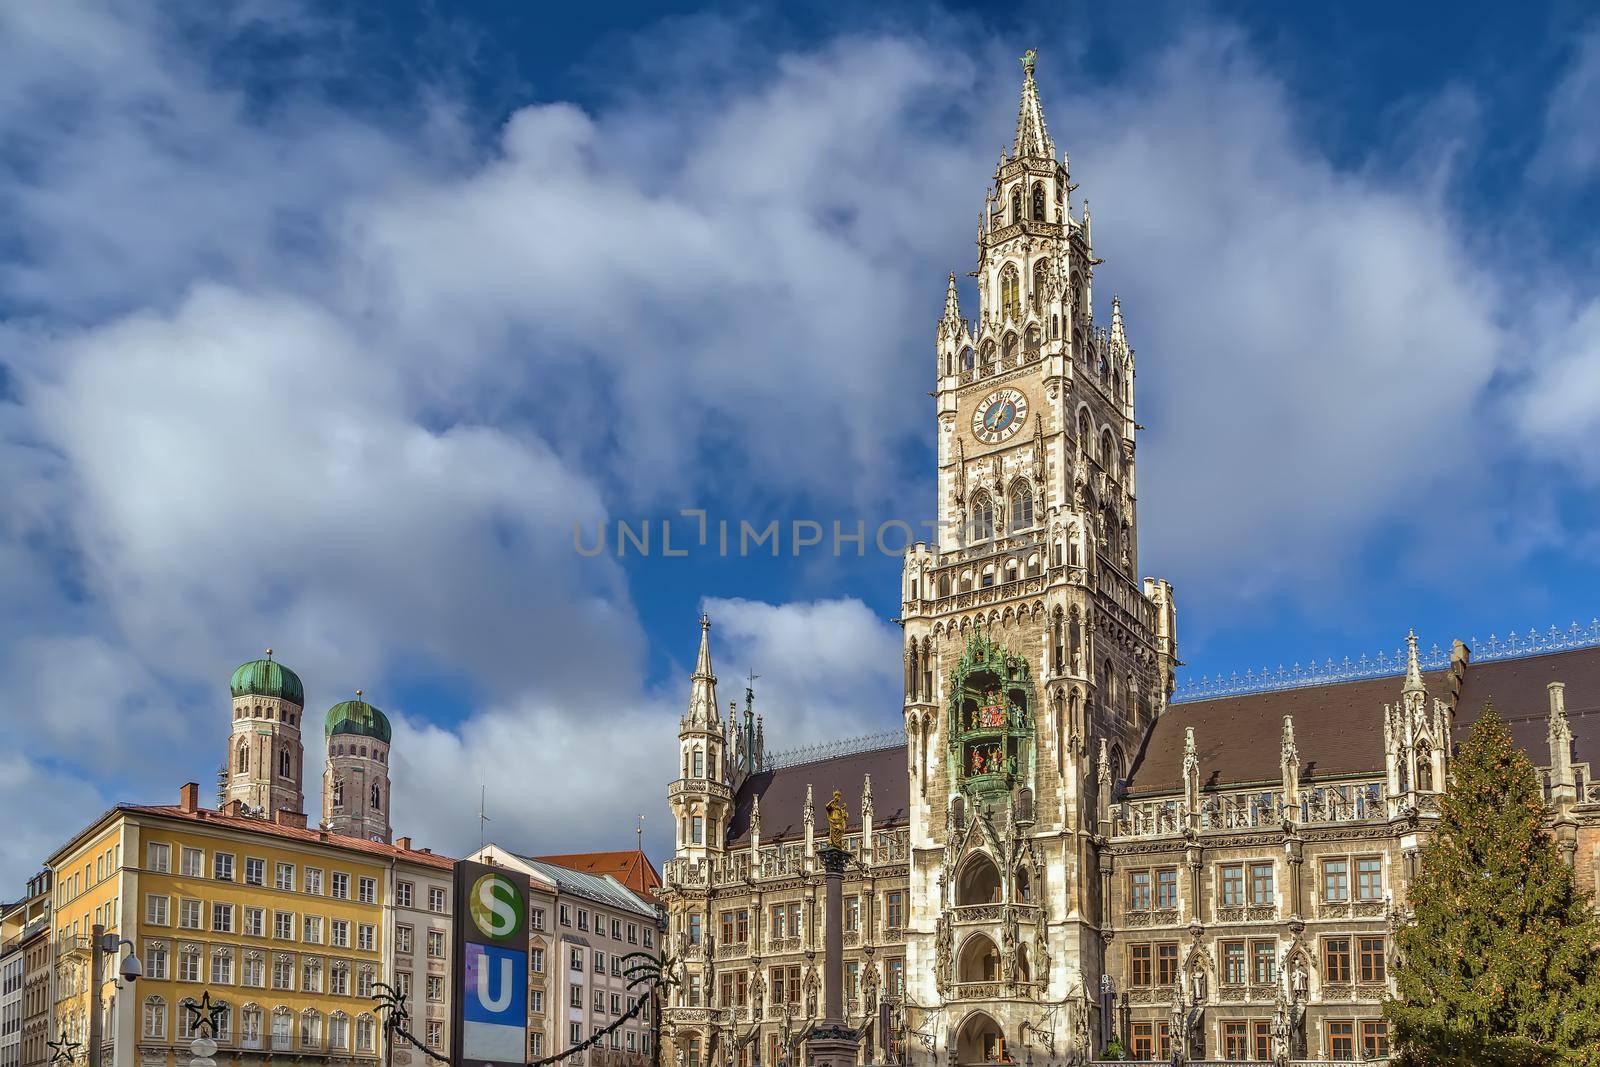 New Town Hall, Munich, Germany by borisb17